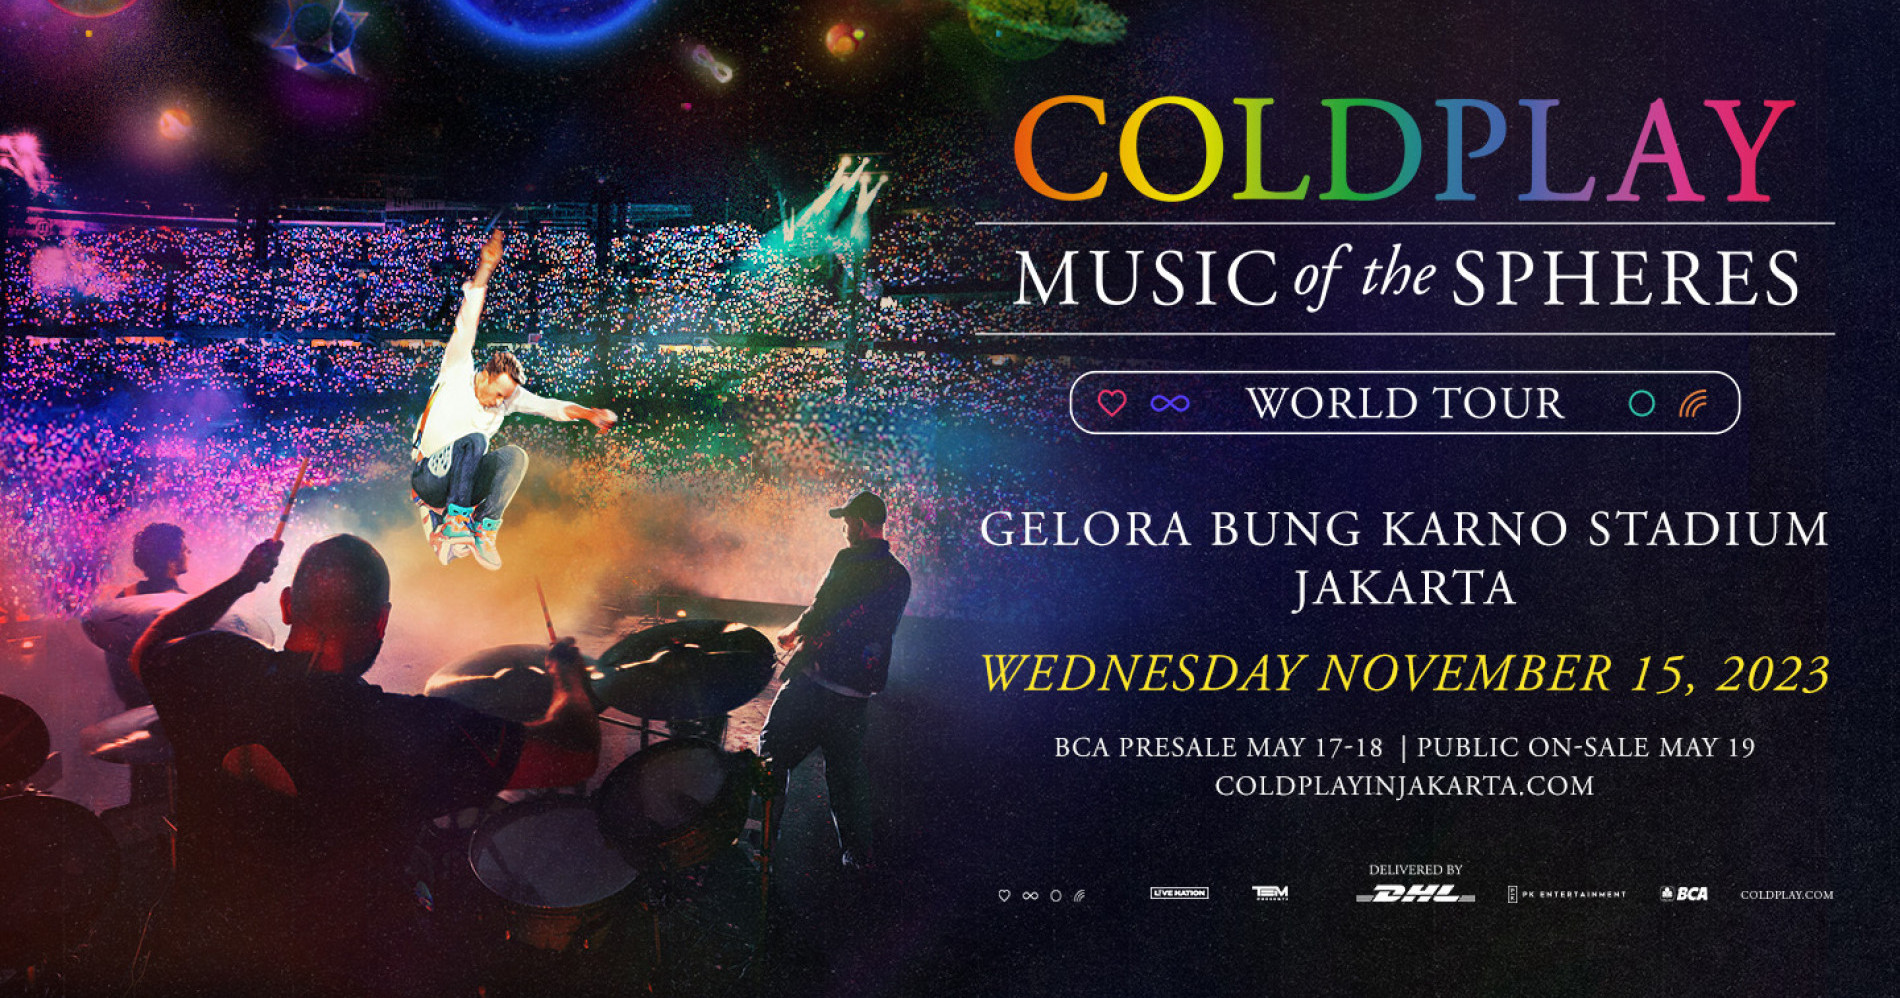 Tiket konser Coldplay di Jakarta (sumber gambar: coldplayinjakarta.com)